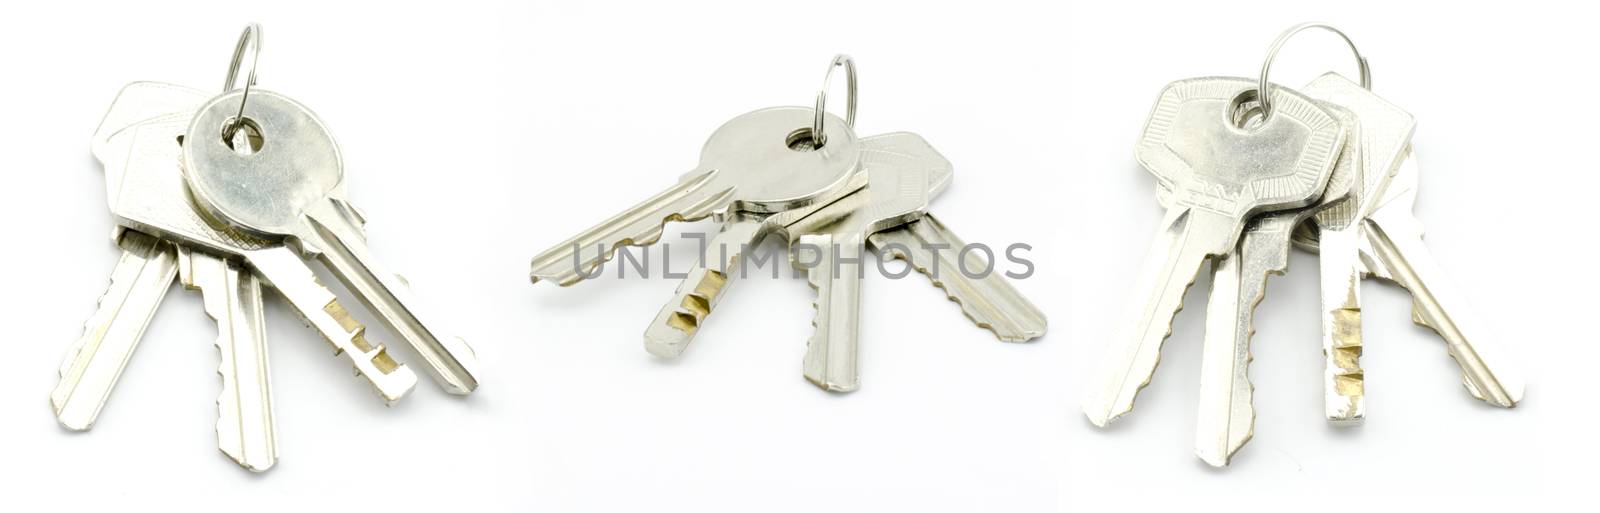 keys isolated on white by ammza12